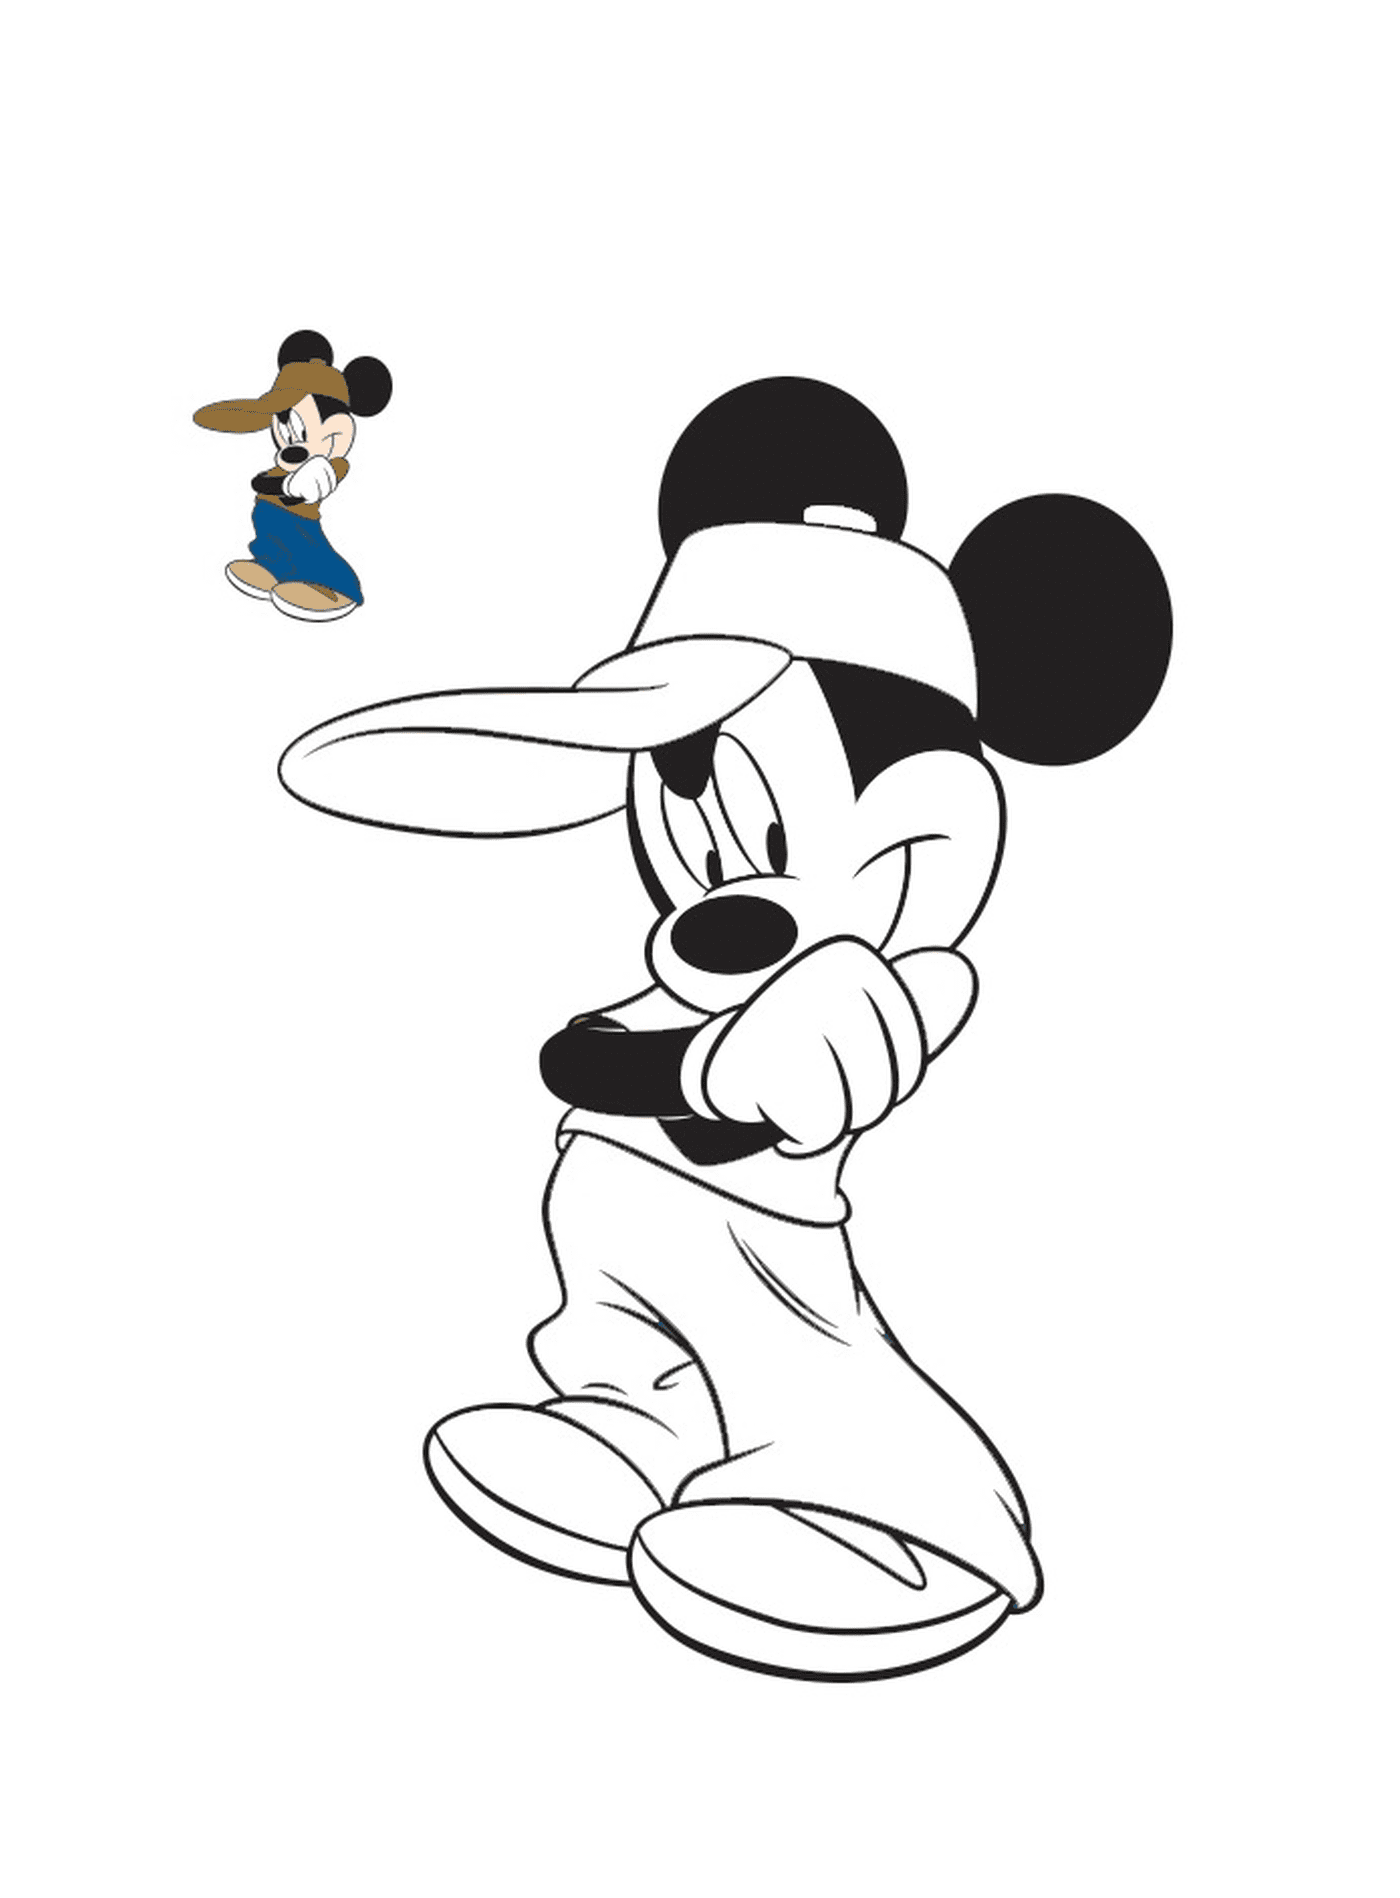  Mickey Mouse plays baseball: baseball player 